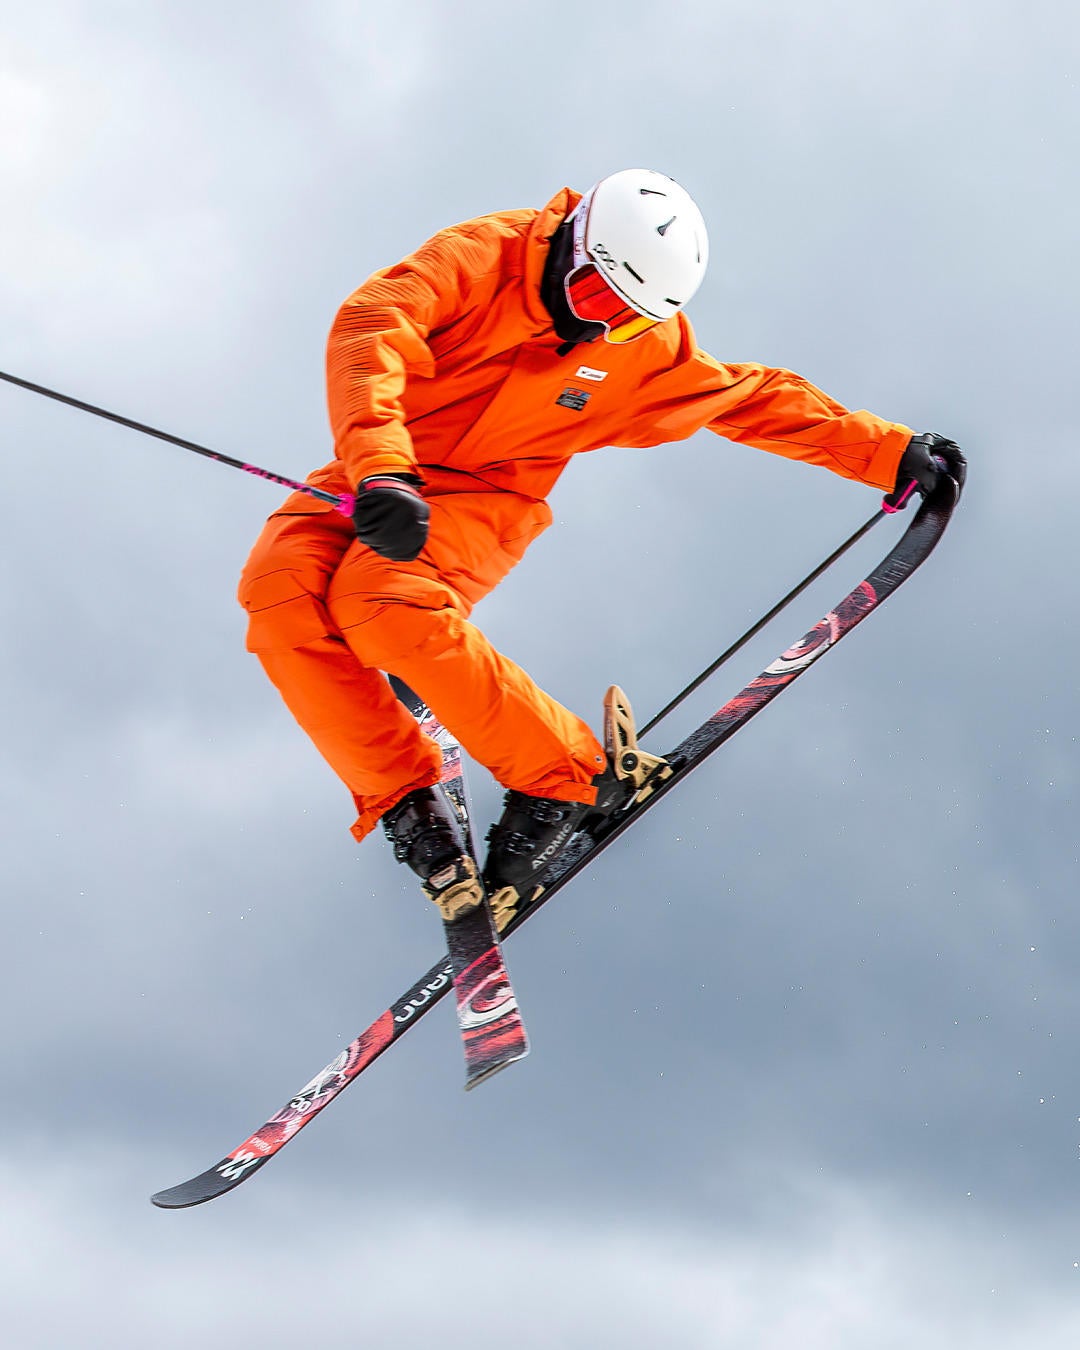 skywalker-pilot-ski-suit-and-goggles-on-alex-ferreira-2.jpg